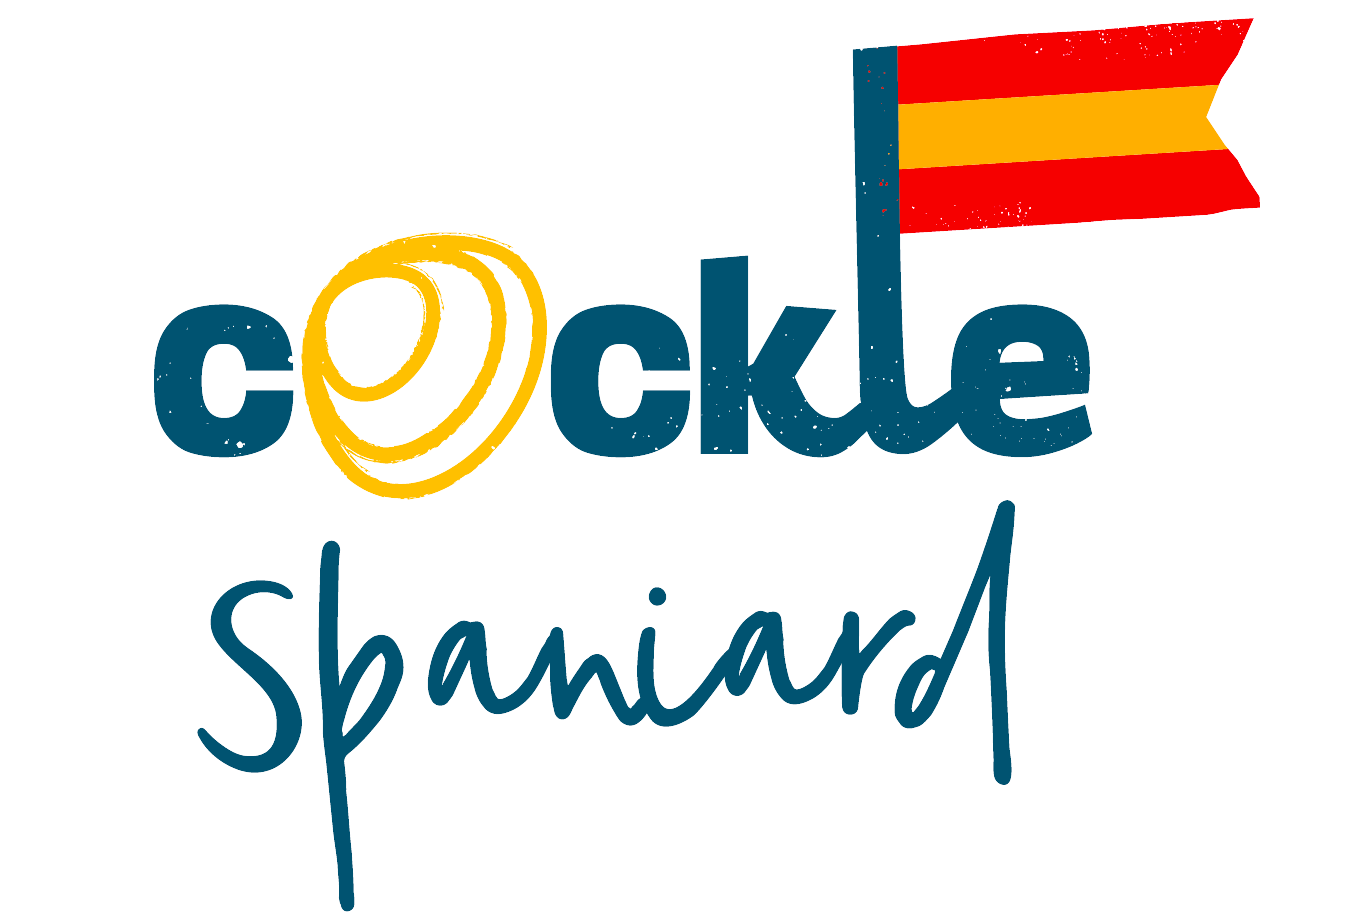 Cockle Spaniard